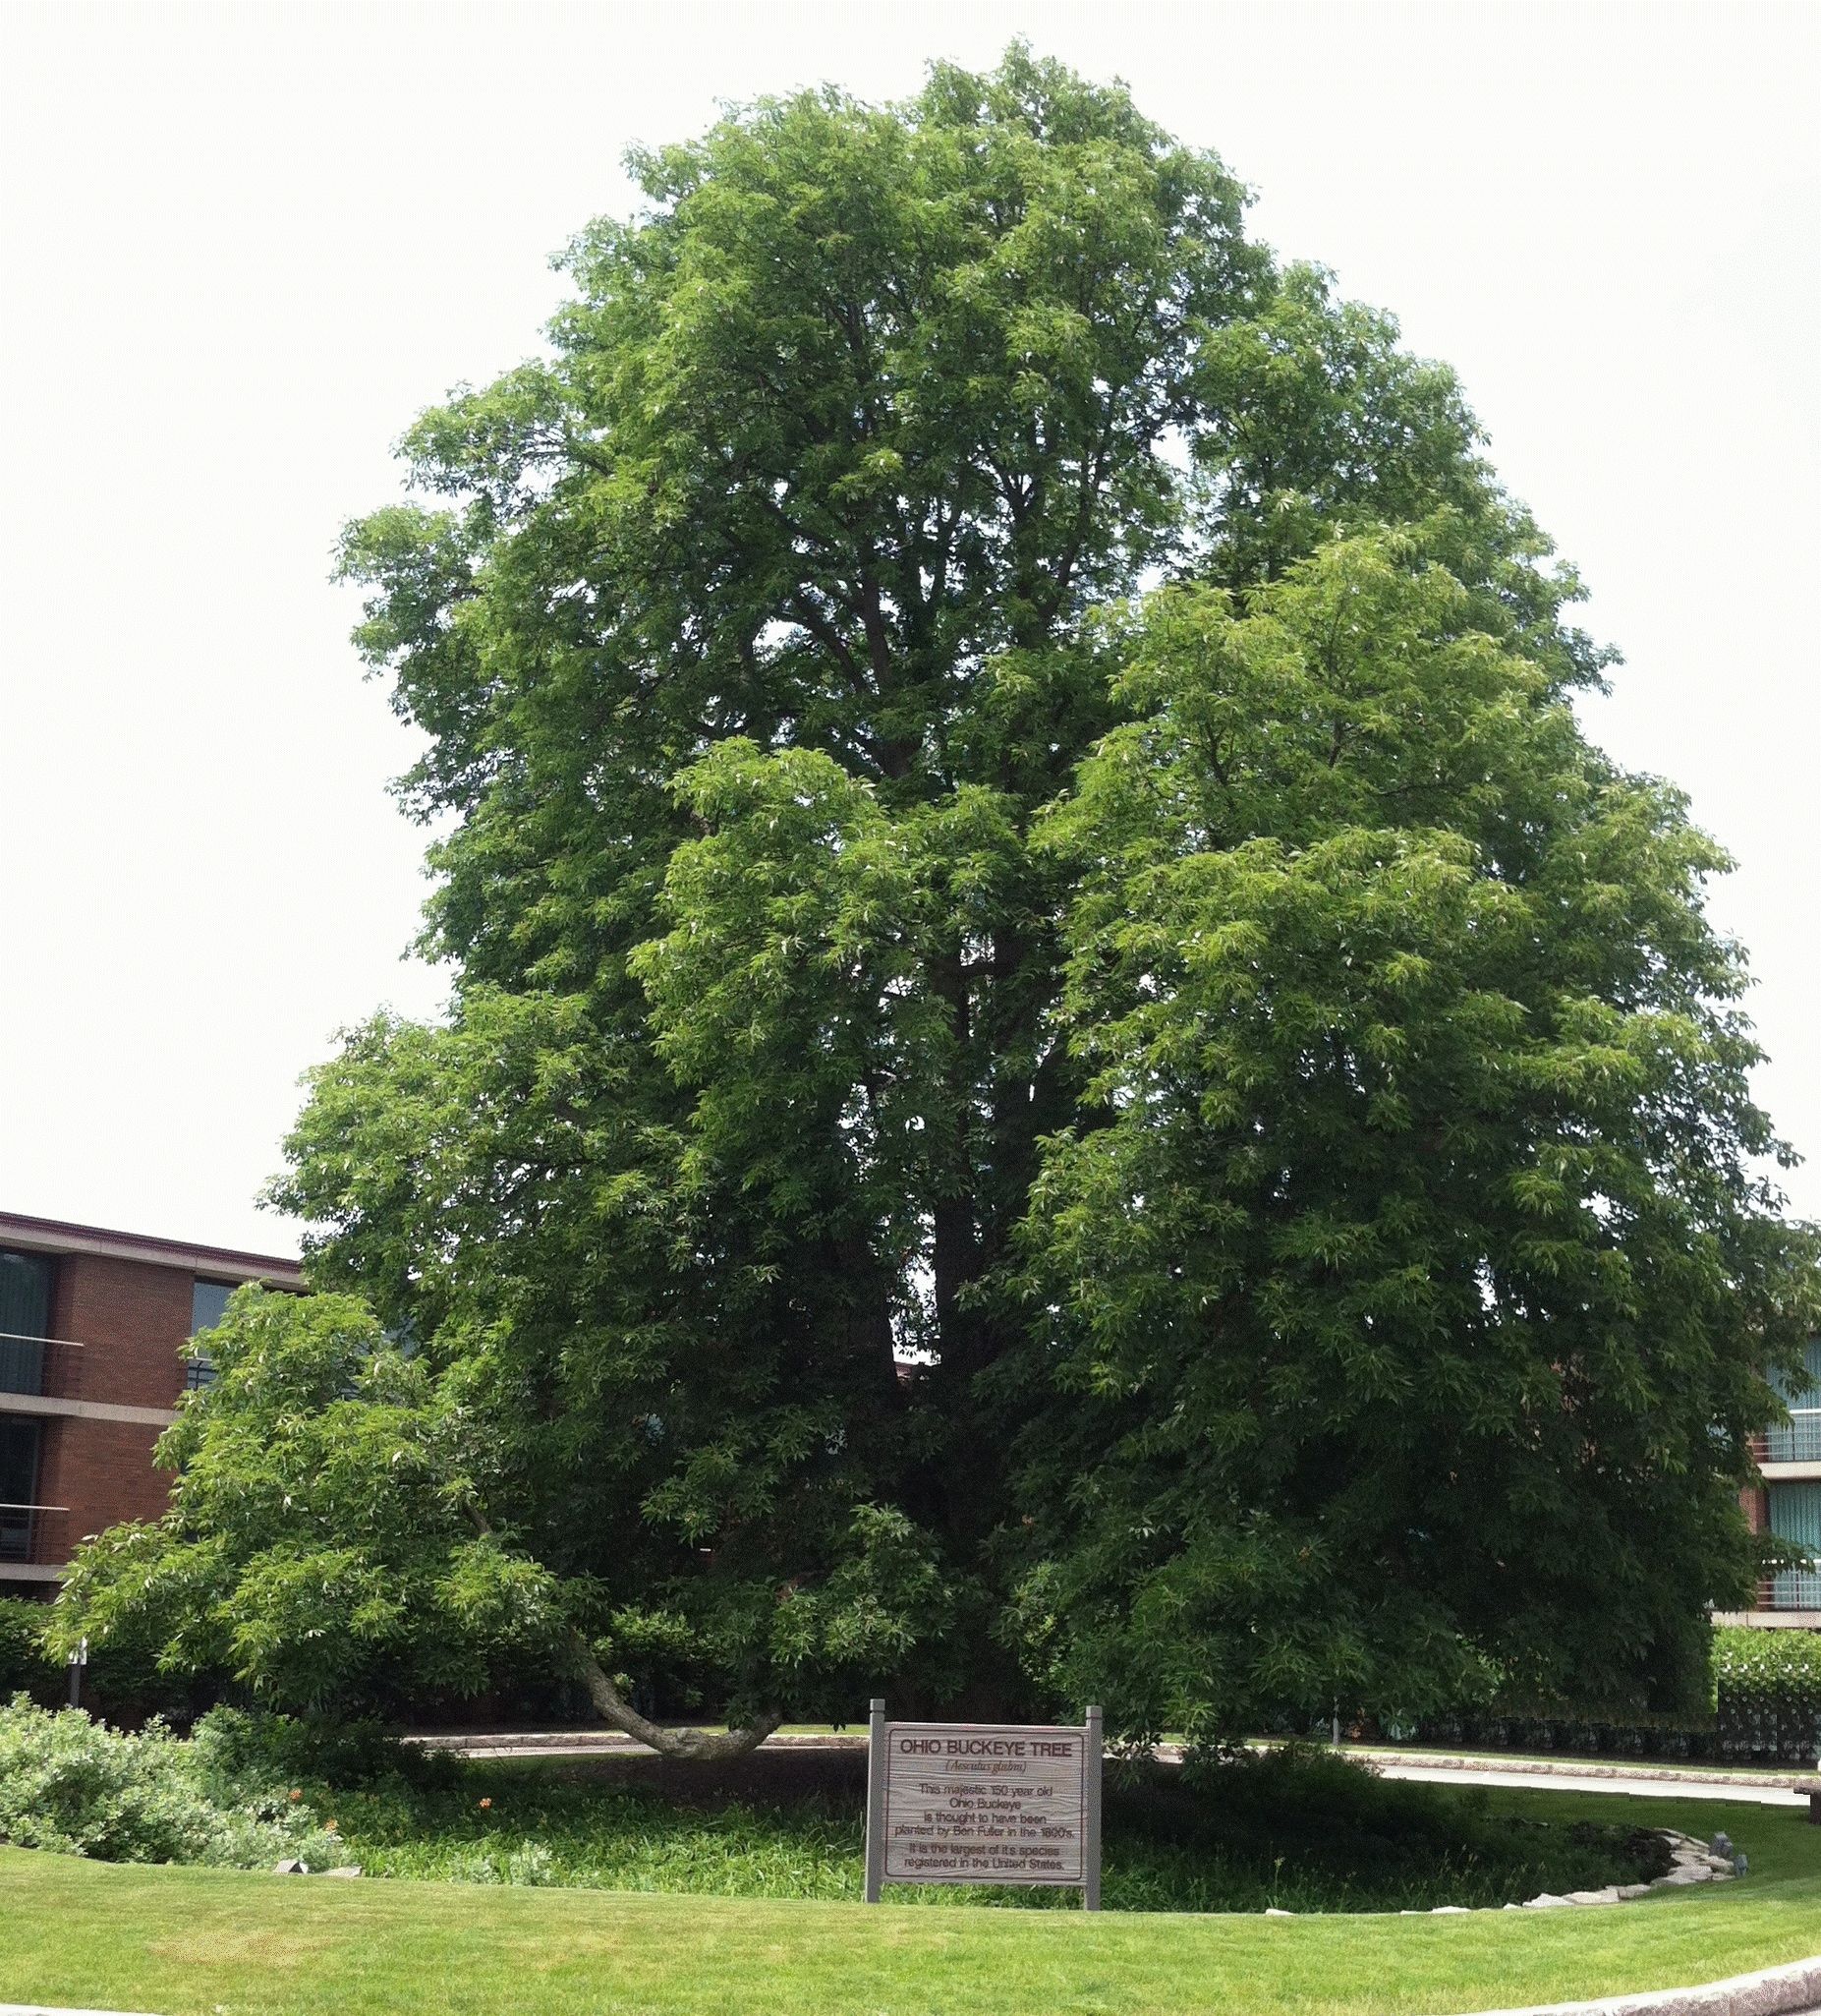 National Champion Ohio Buckeye Tree